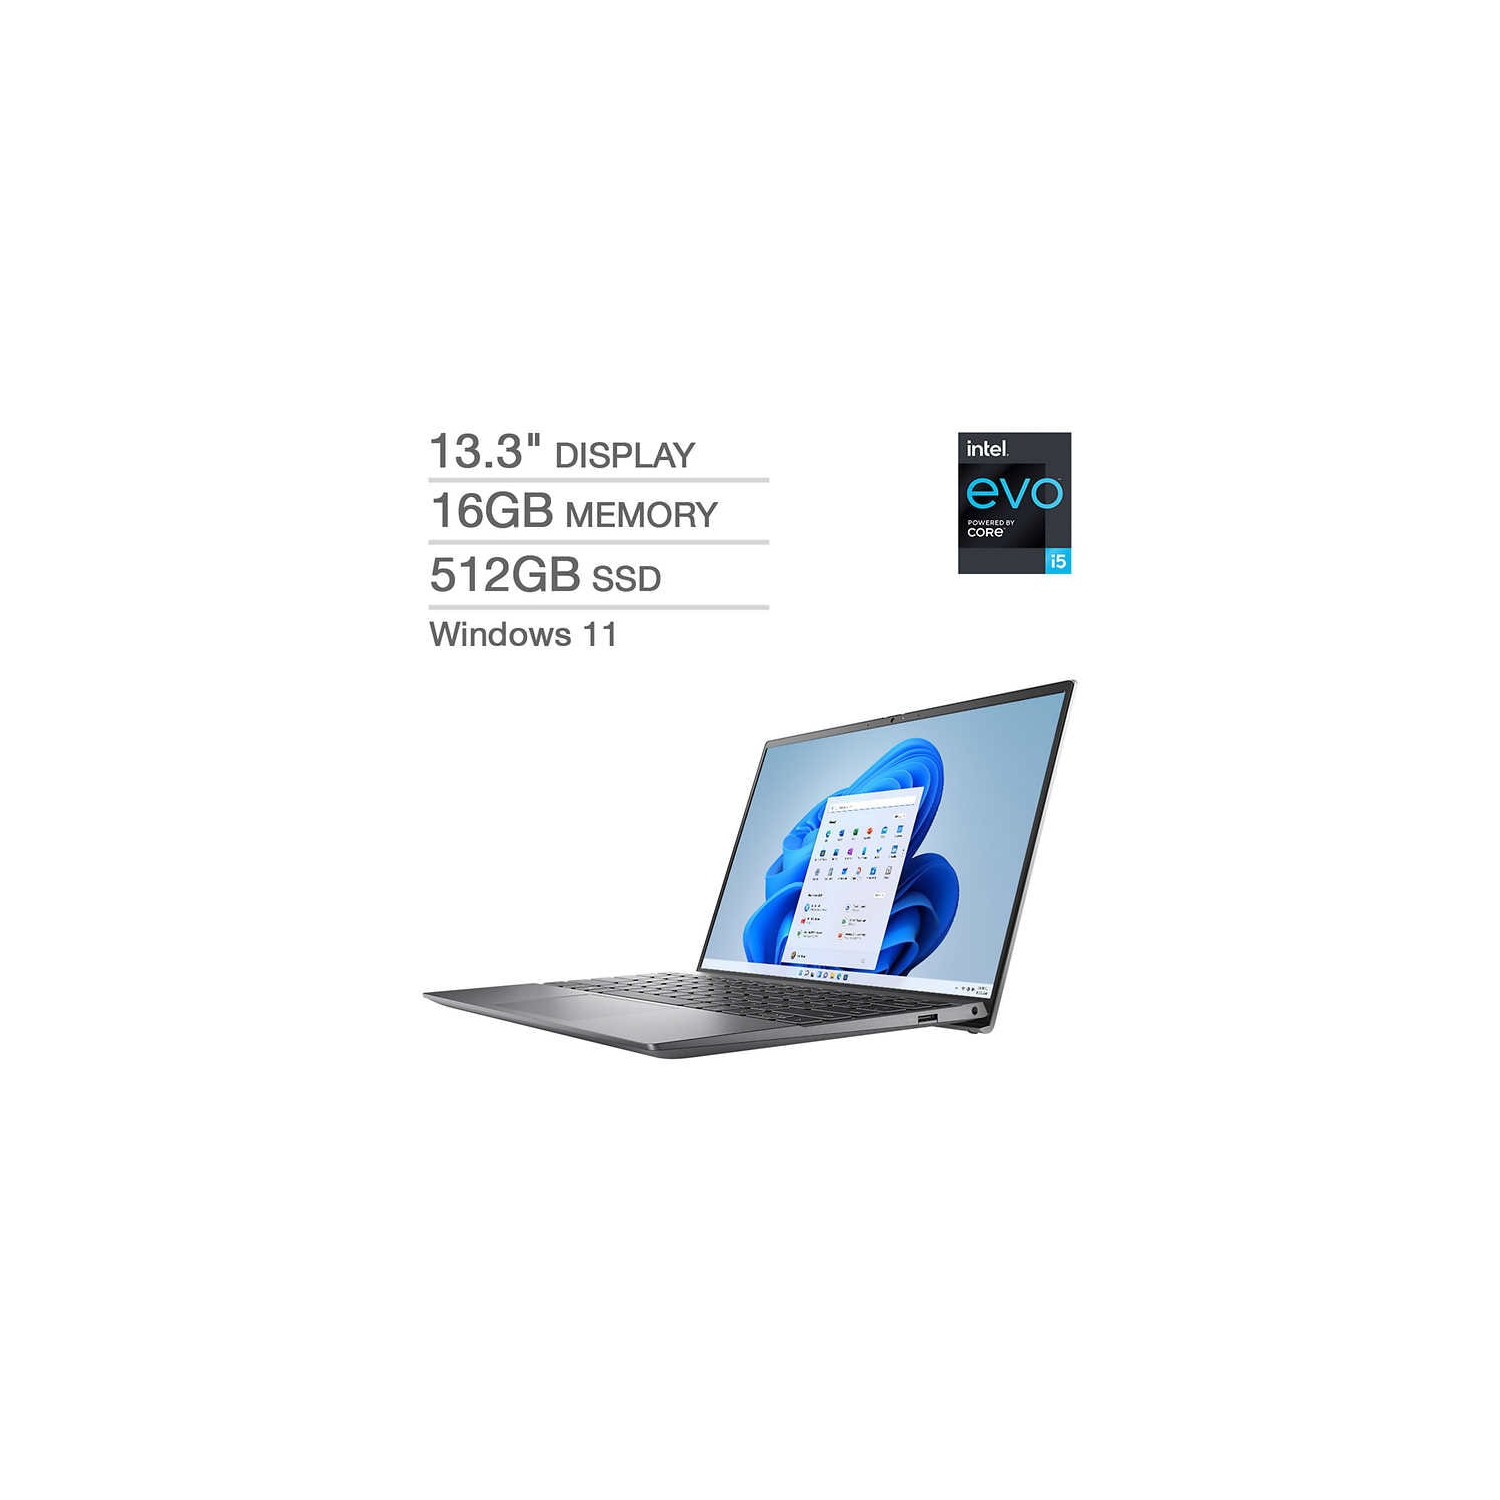 Dell Inspiron 13 i5310 13.3" FHD+ Display Intel Evo Laptop ( Intel Core i5-11320H / 512GB SSD / 16GB RAM / Webcam / Windows 11 Home ) - Platinum Silver - Open Box